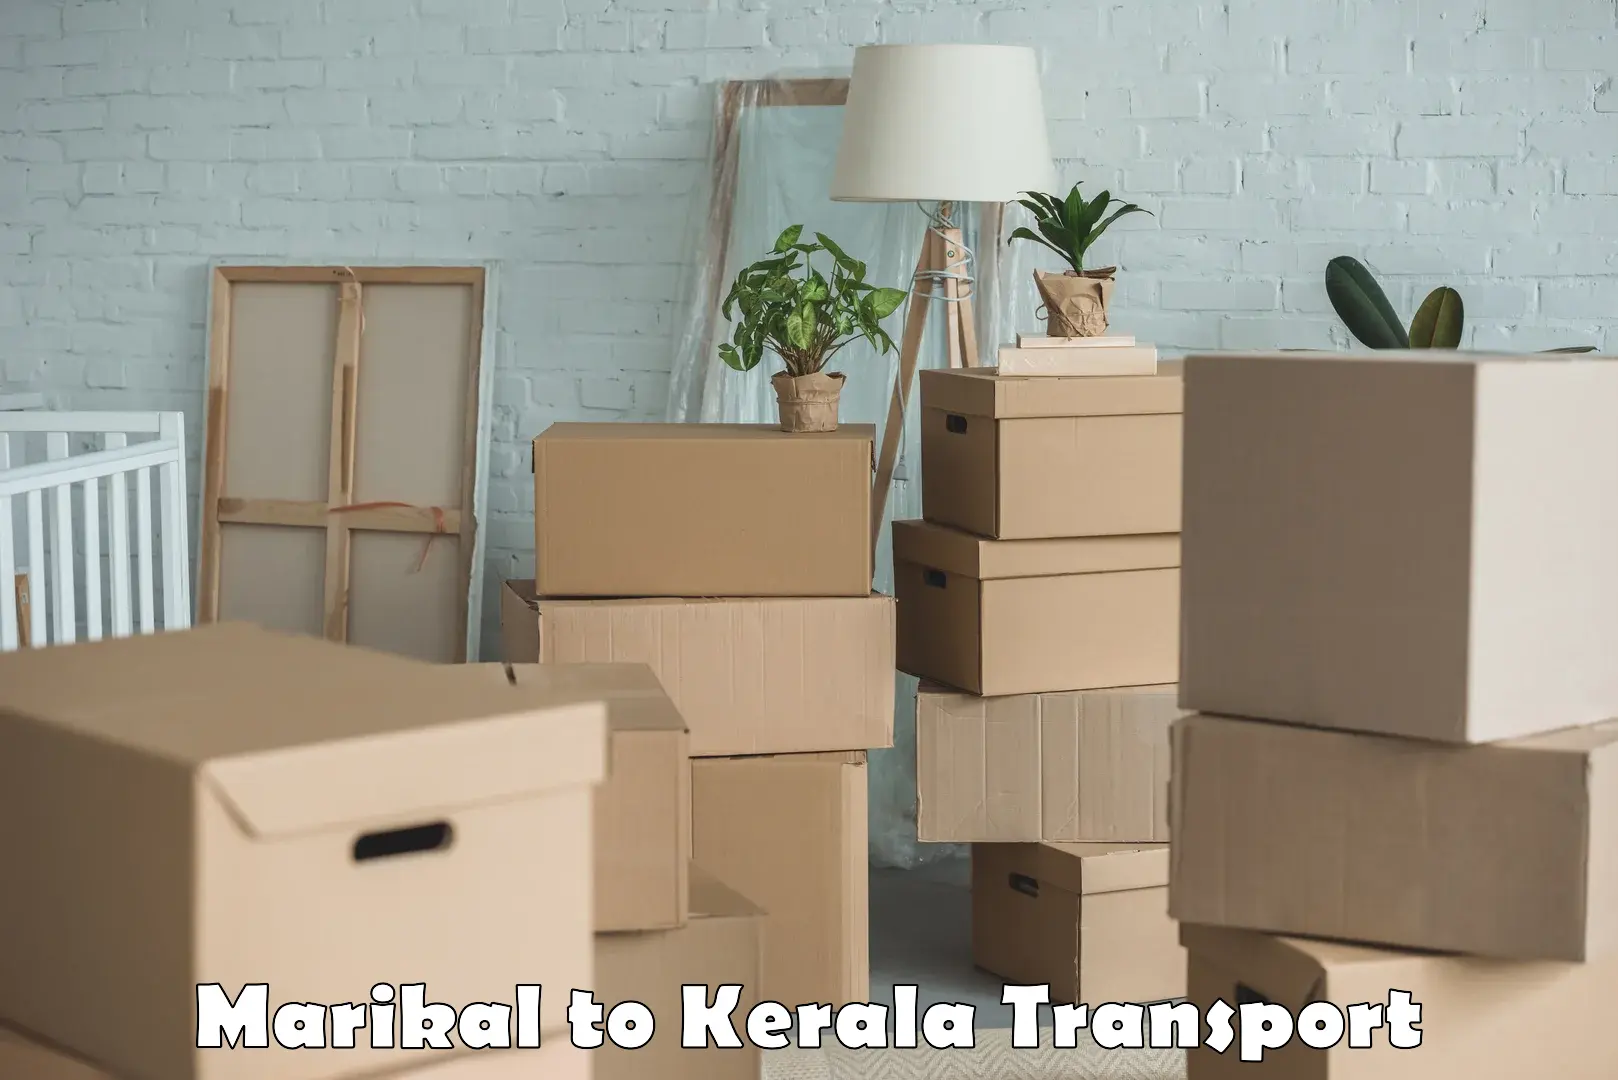 Furniture transport service Marikal to Kerala